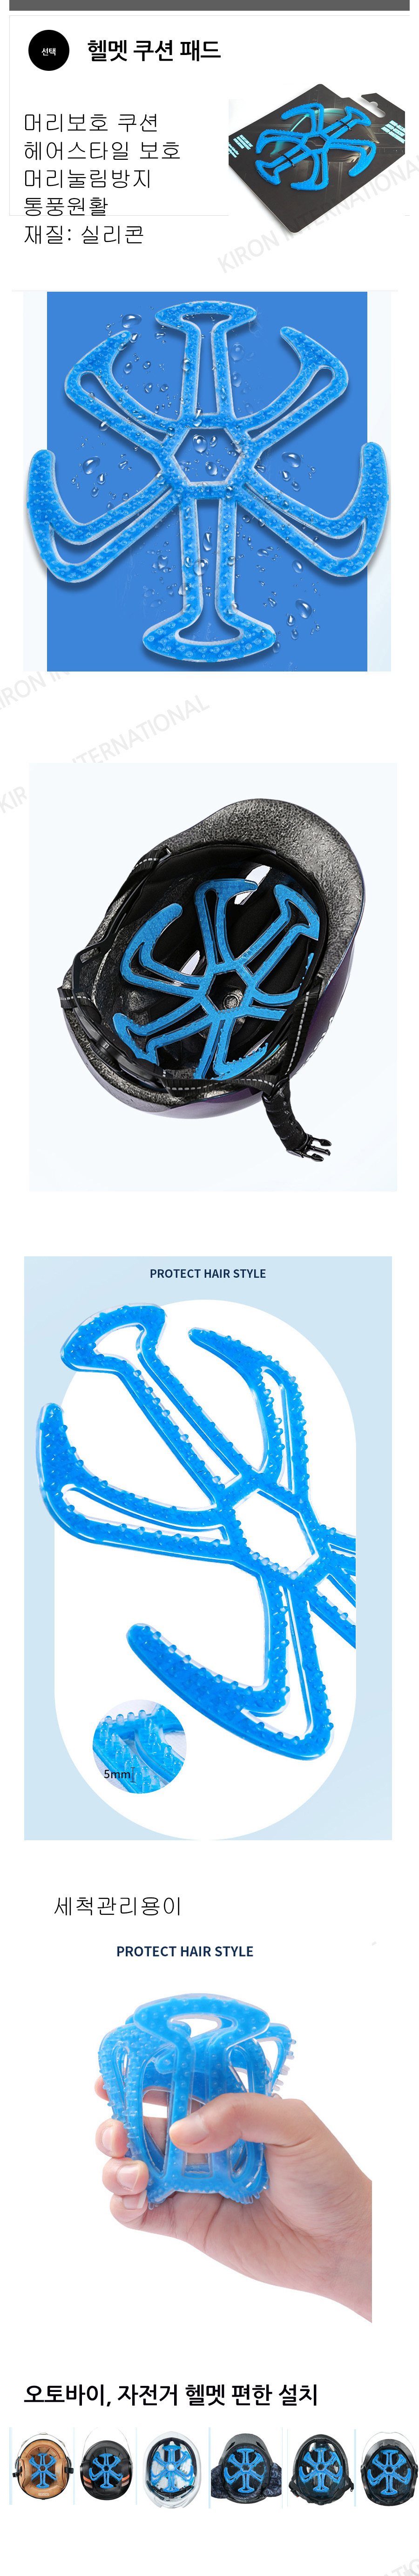 helmet blue cution pad.jpg